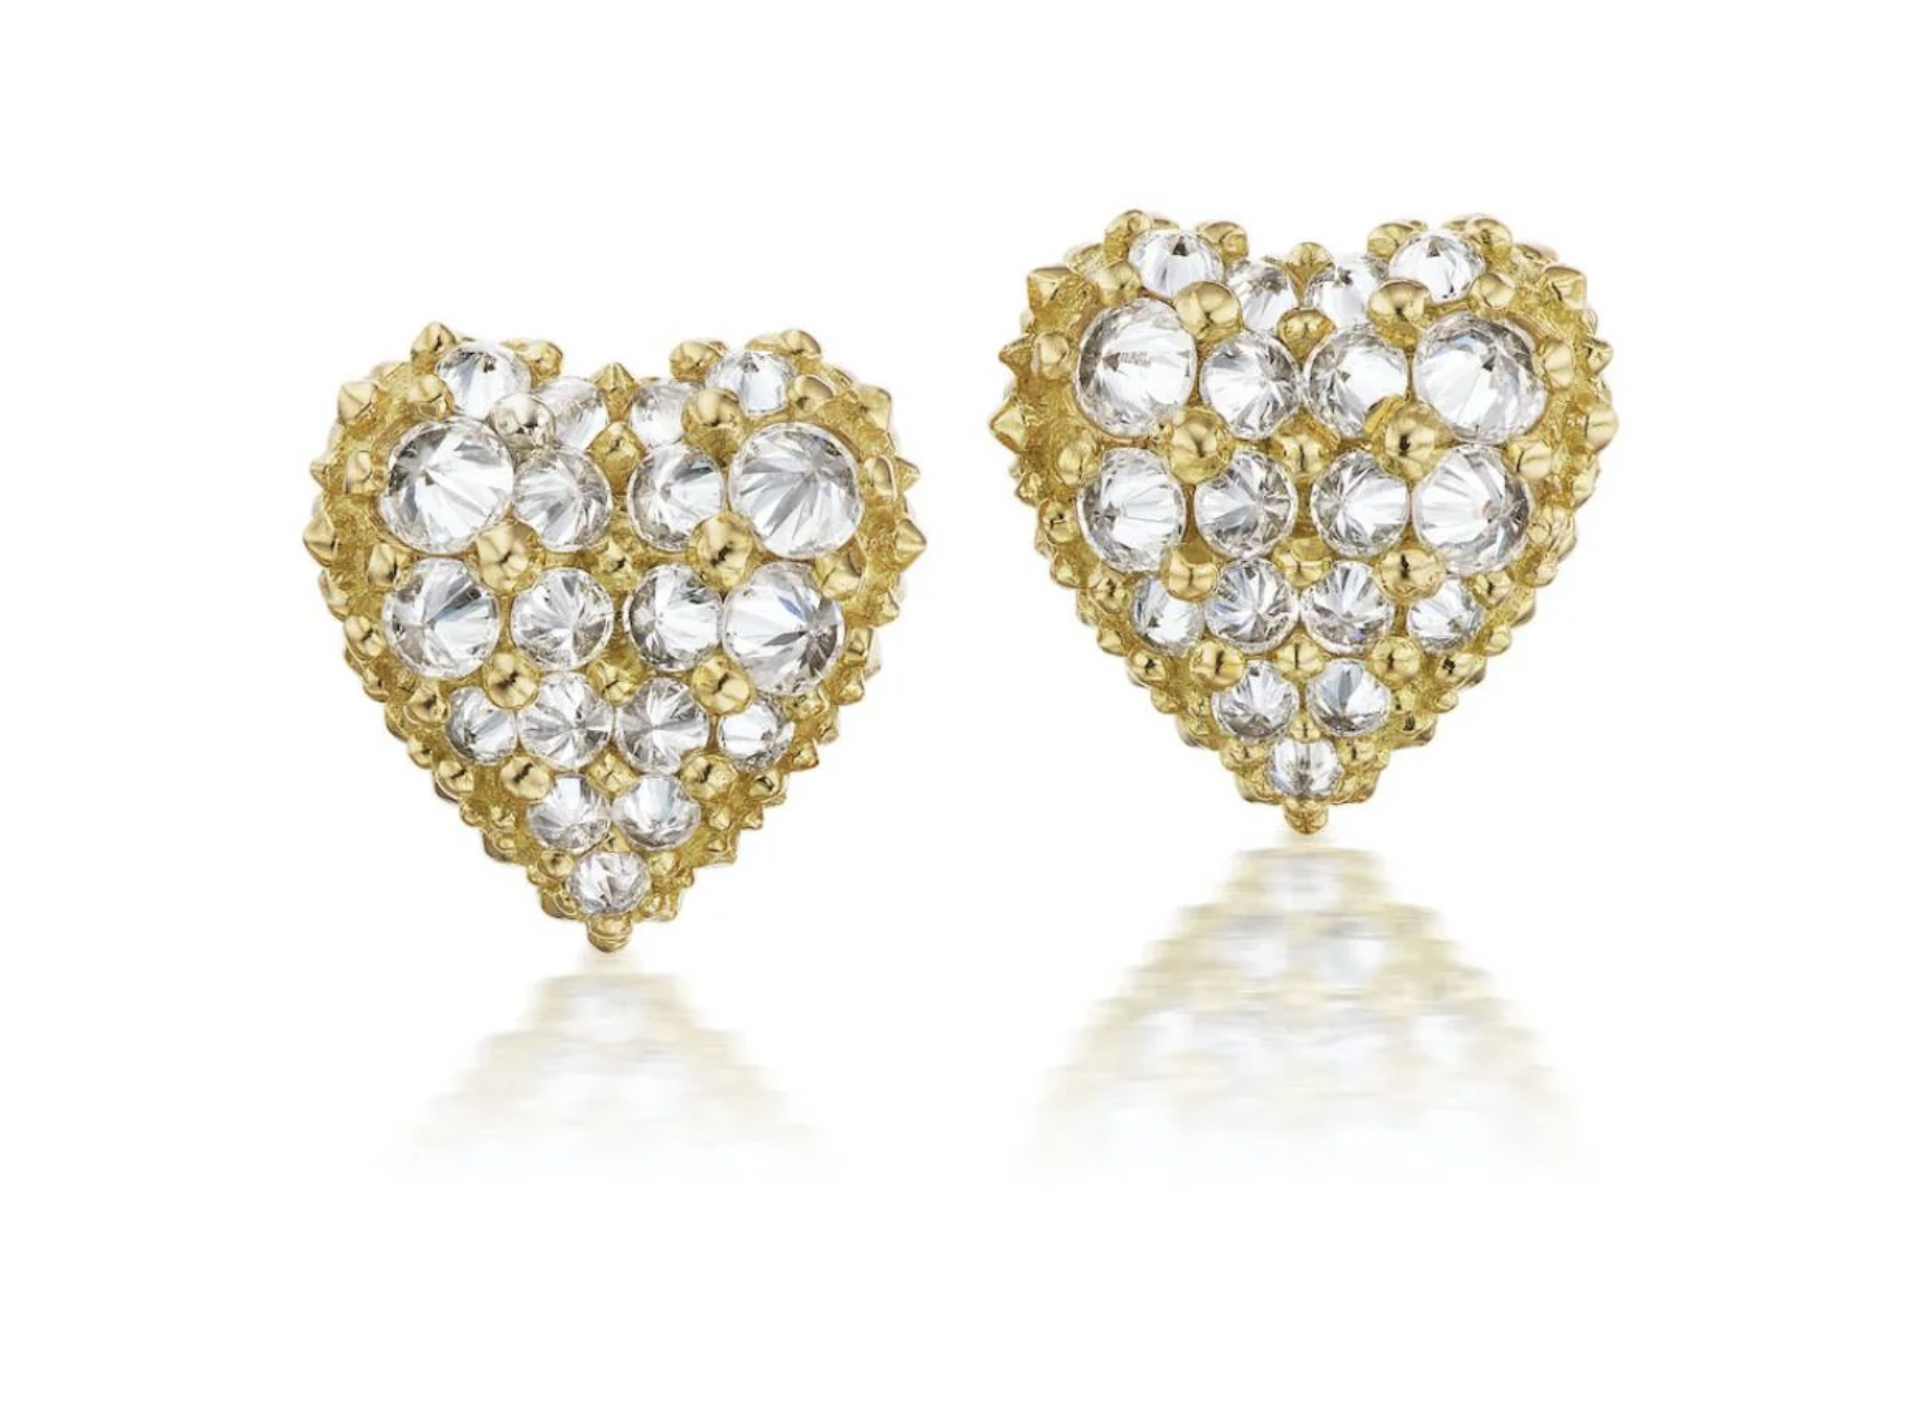 Pierce Your Heart Diamond Studs by Ana Katarina